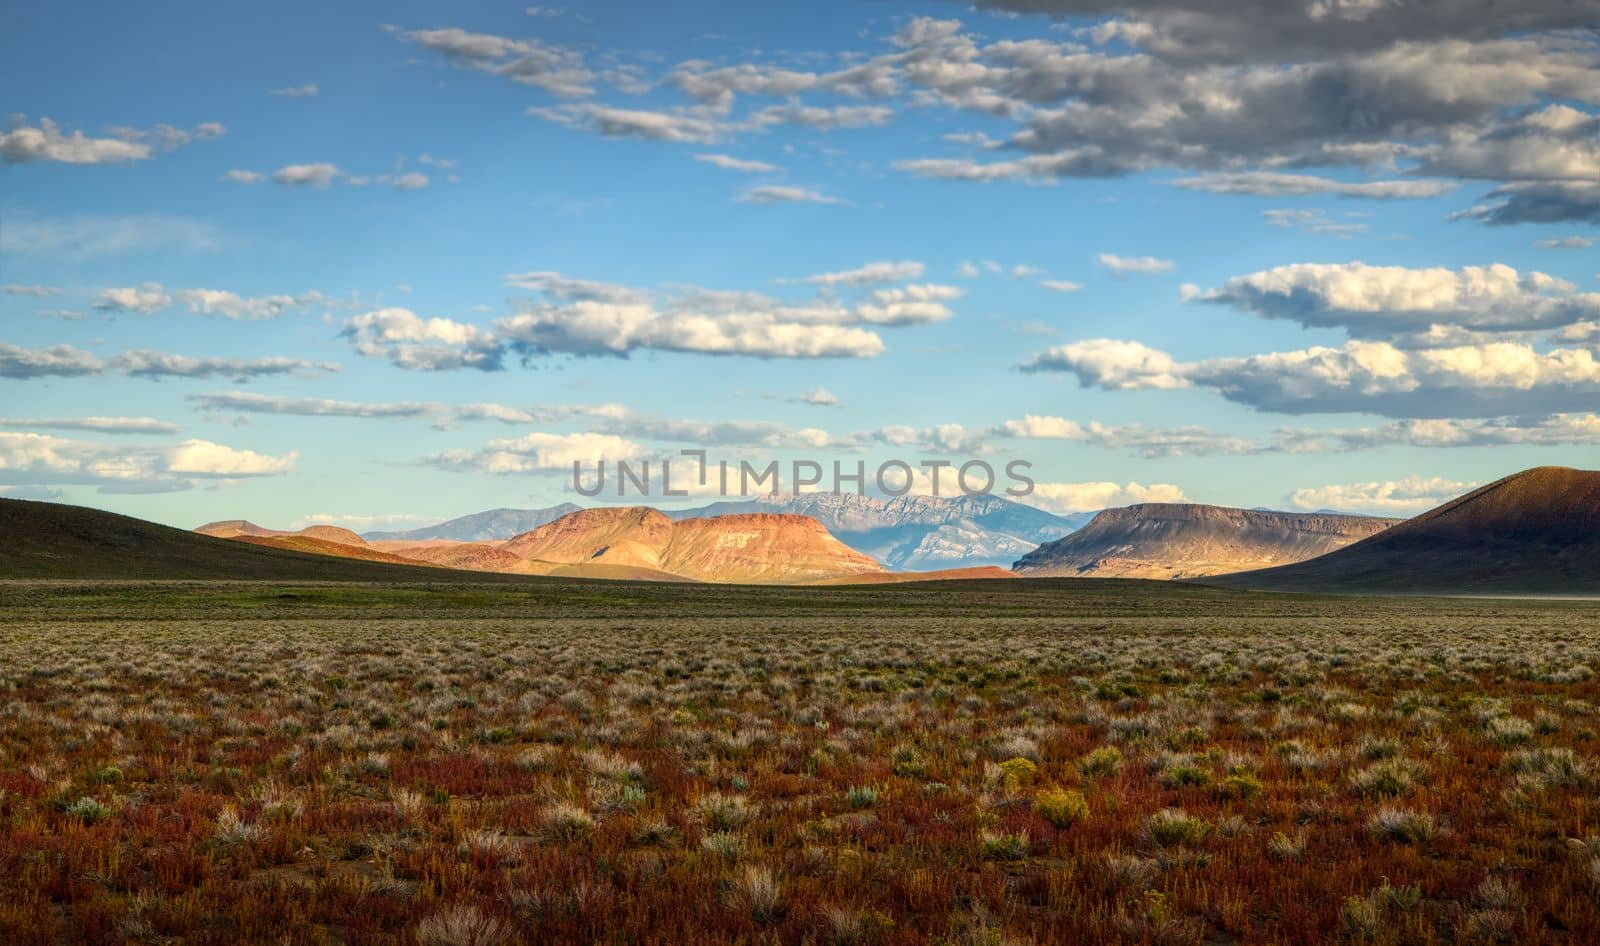 Remote Desert Lunar Crater Area Nevada